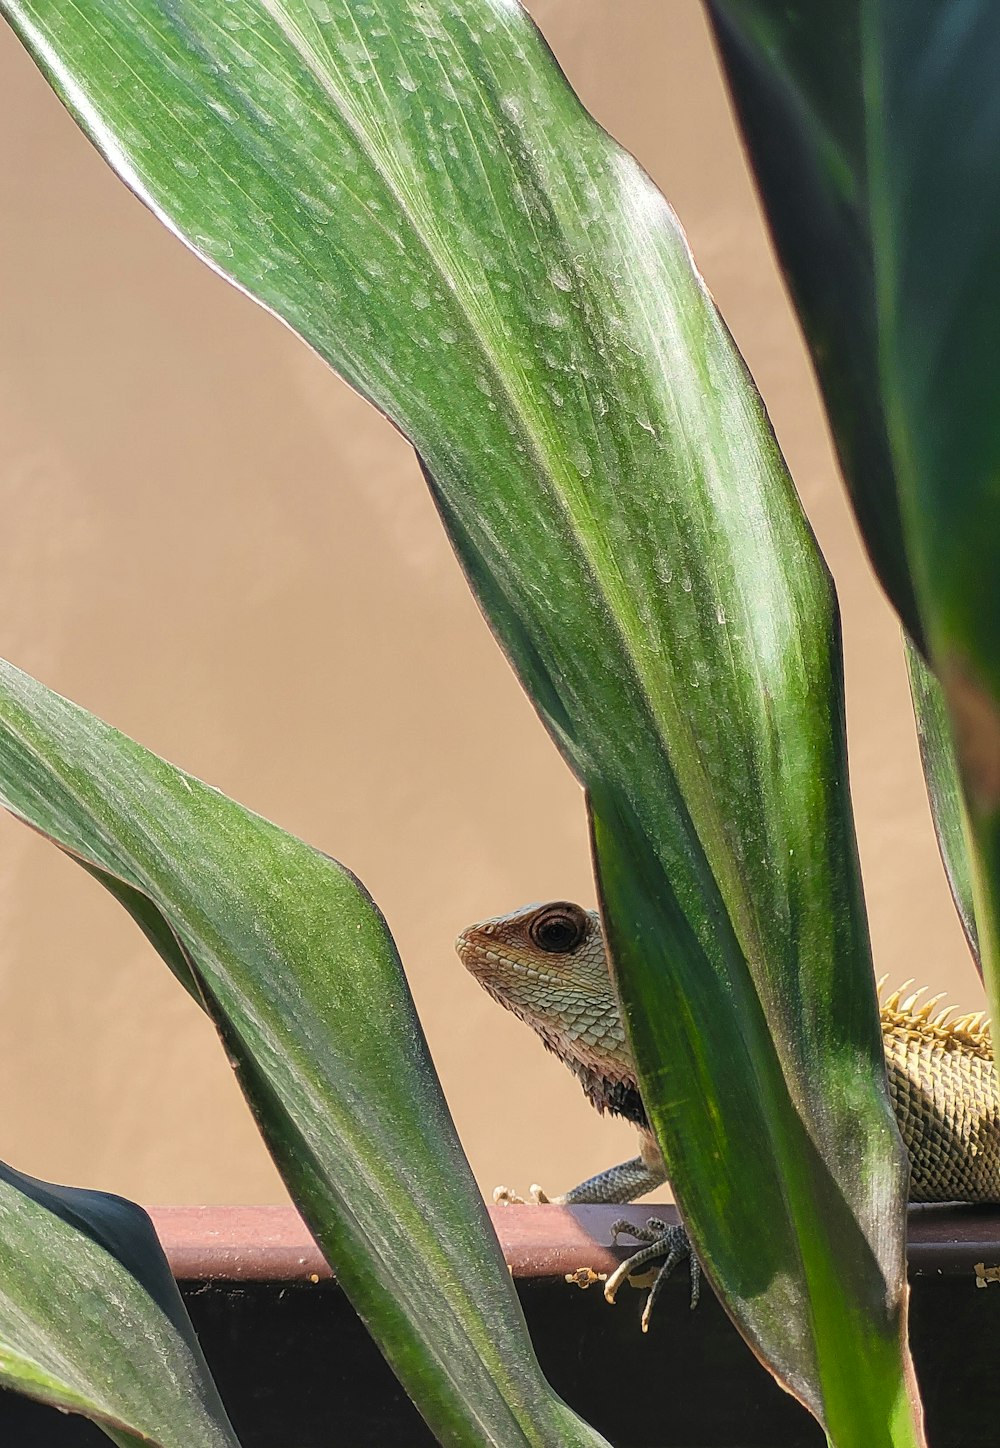 green snake on green plant